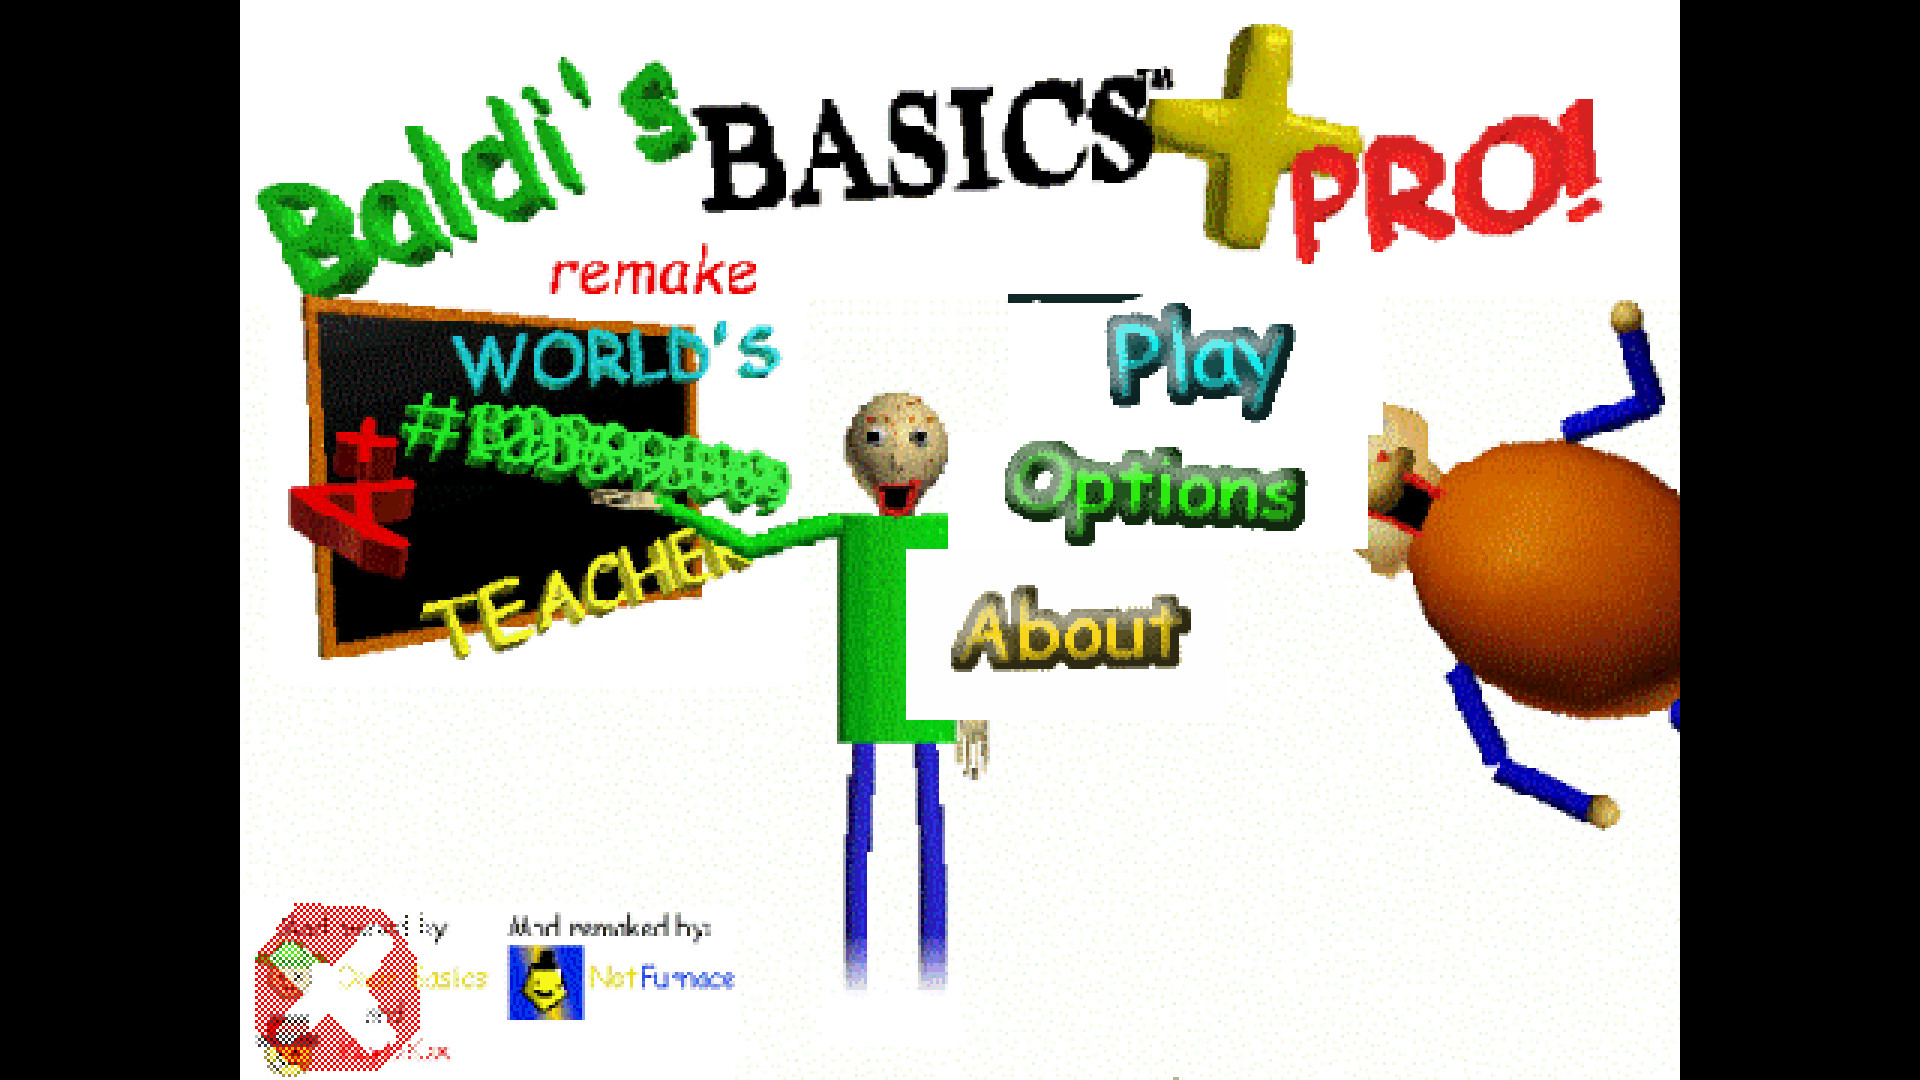 Baldis basics game public demo. Baldi's Basics Plus. Baldi's Basics Plus v0.4. Baldis Basics Plus 0.4. Baldi's Basics Plus - Seed 99.